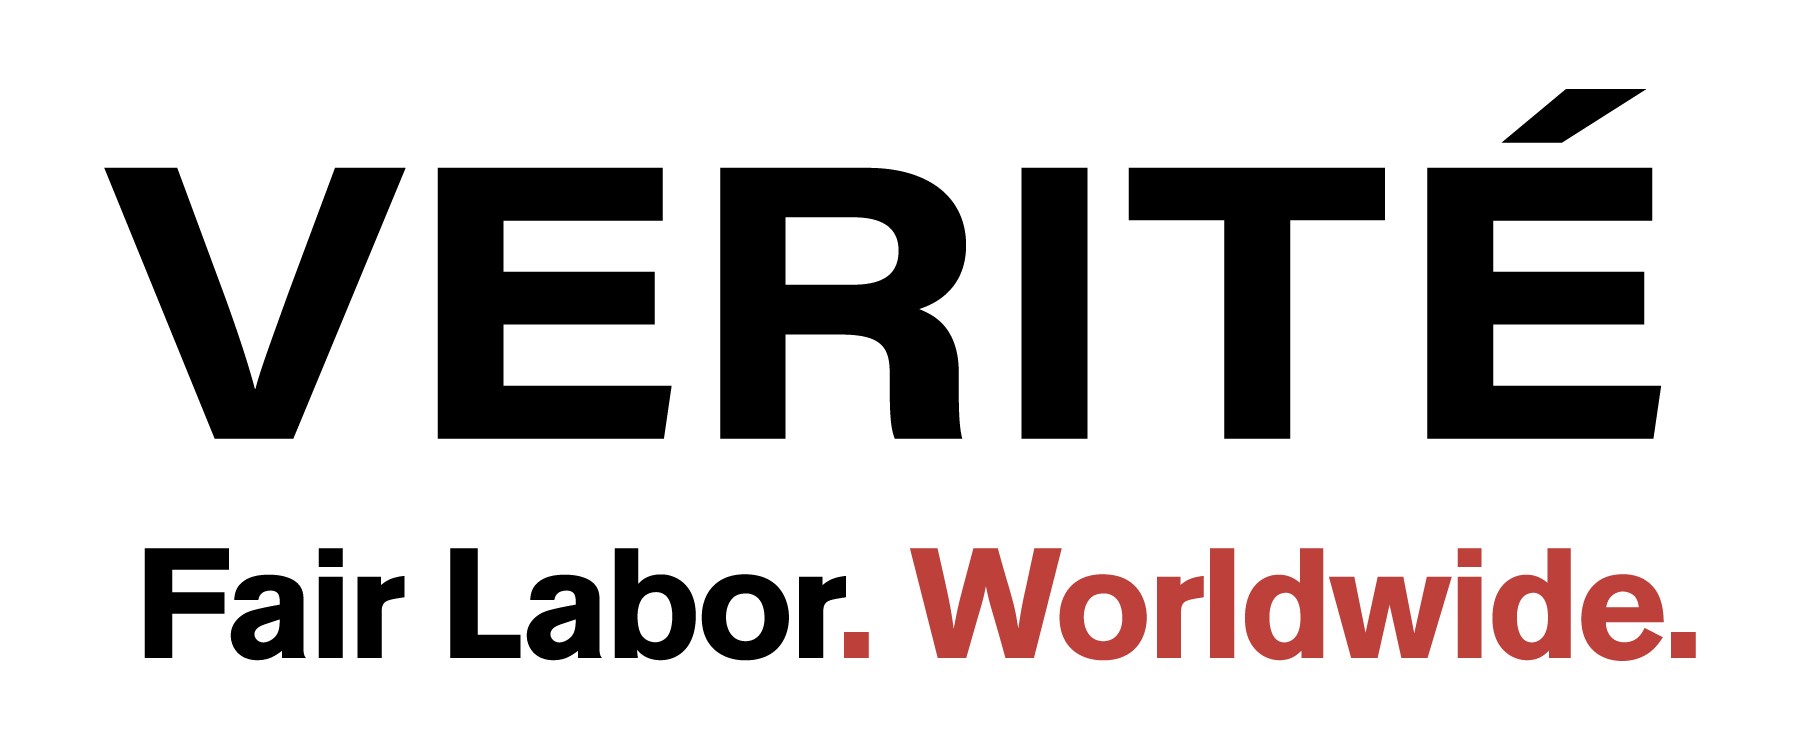 Verité: Fair Labor. Worldwide